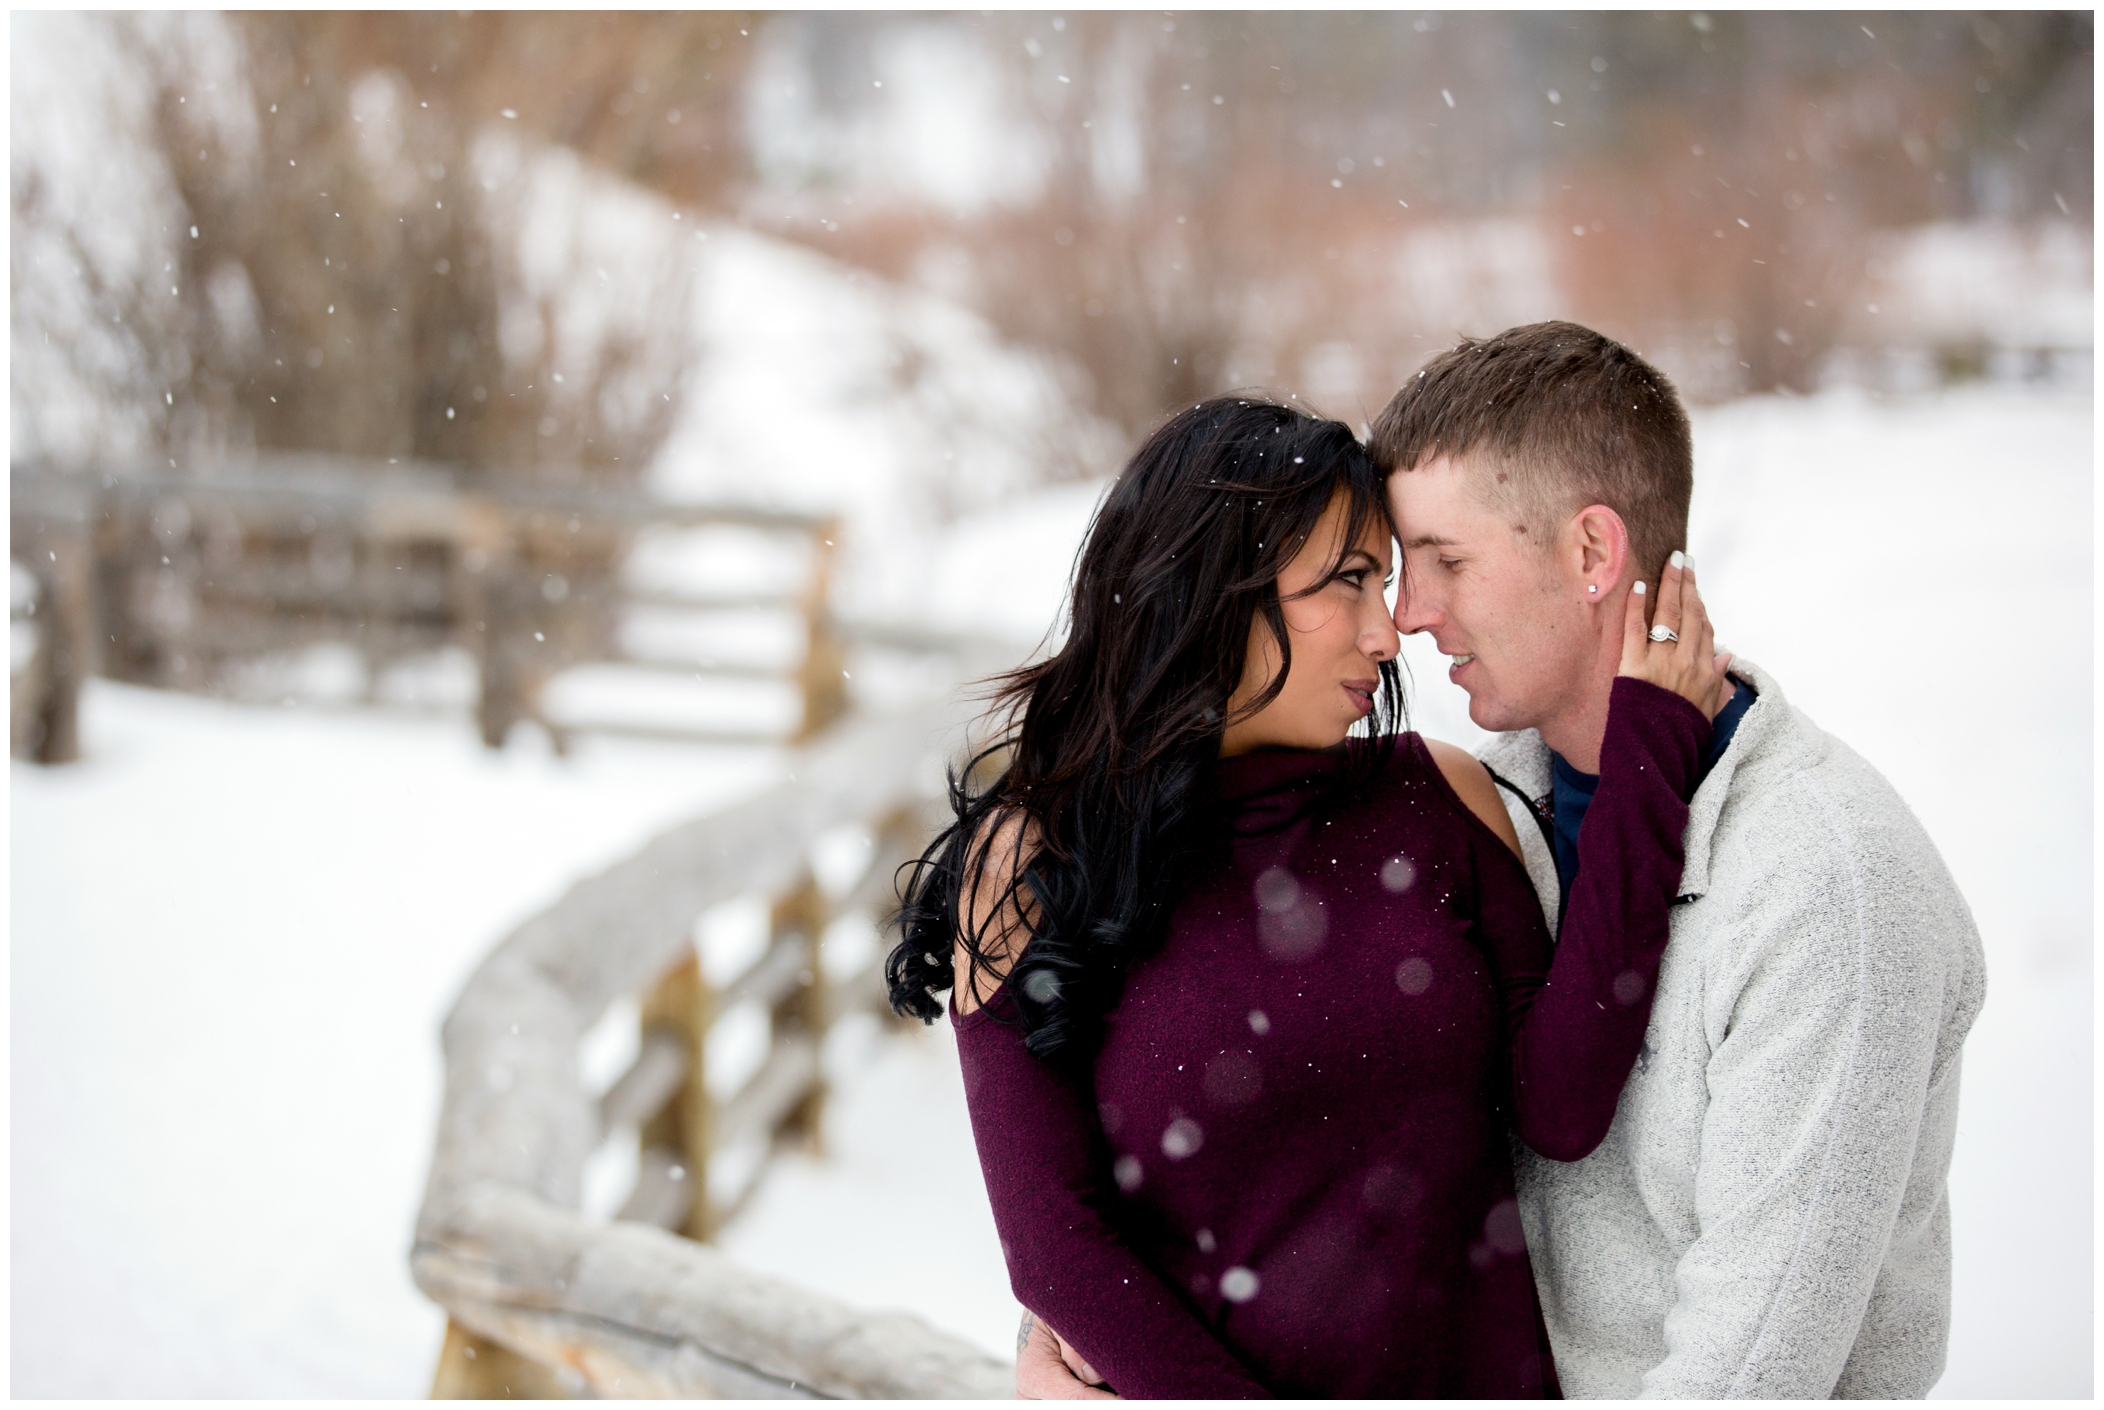 Colorado snowy engagement photo inspiration